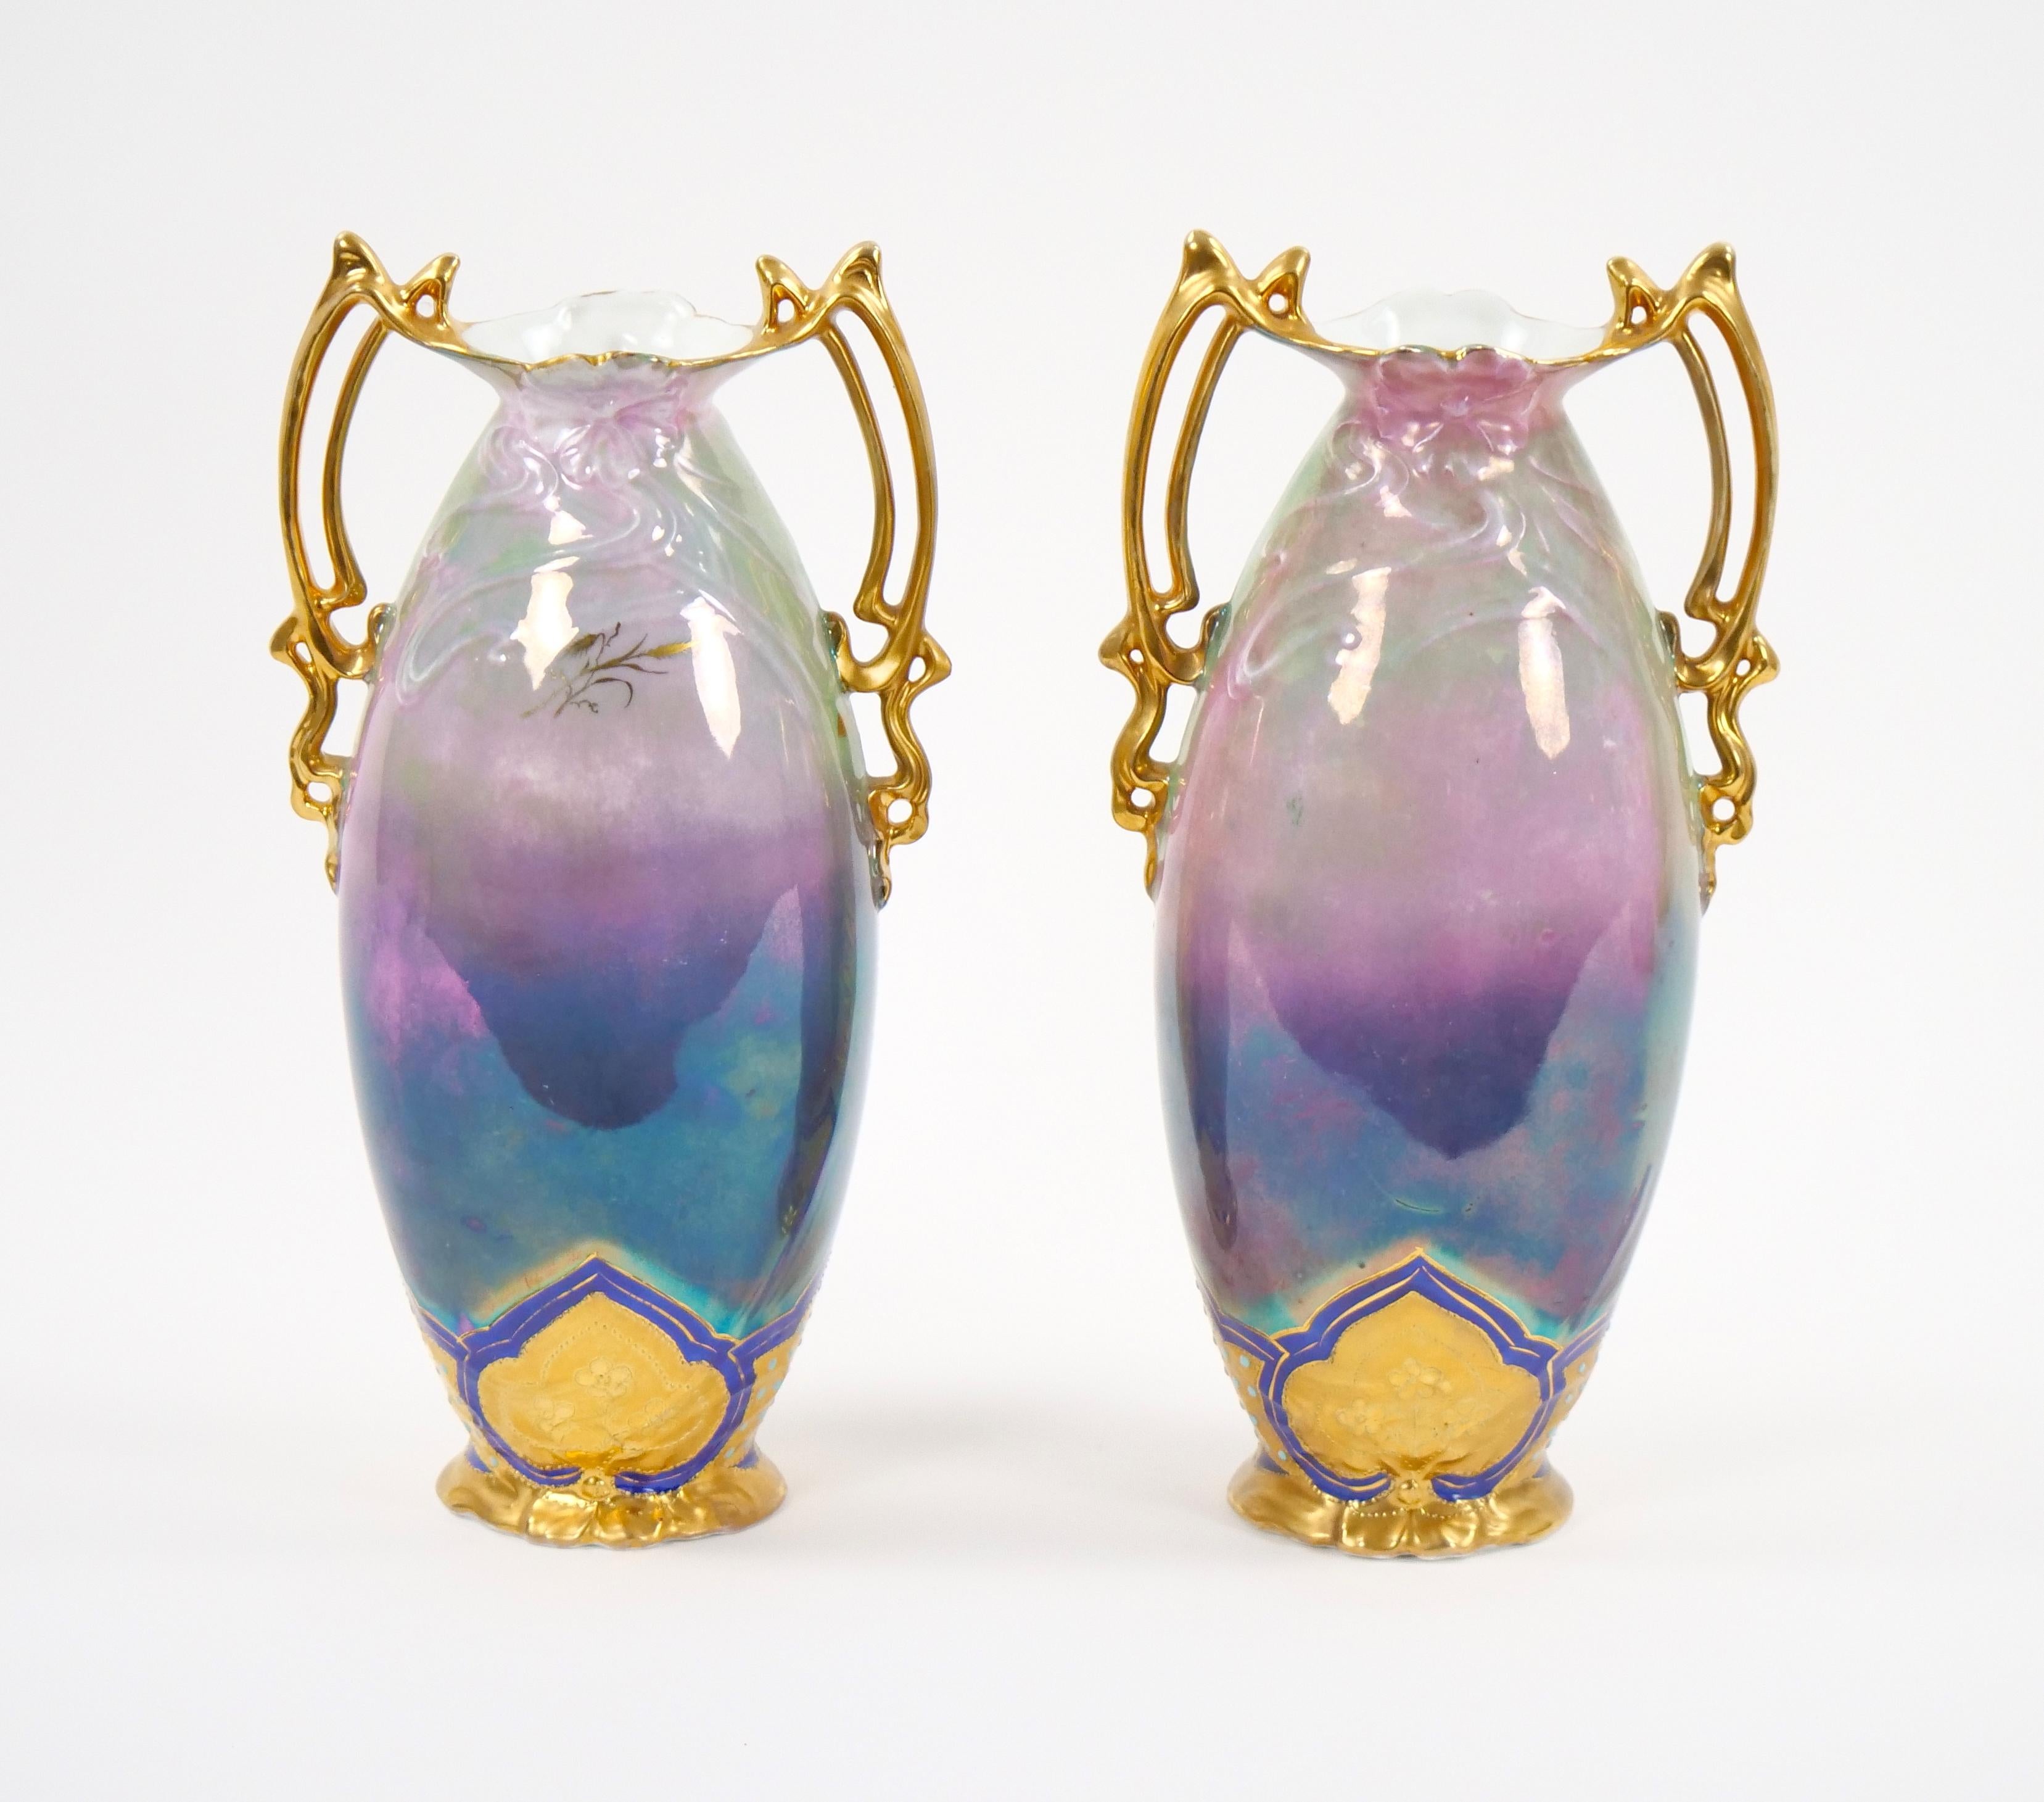 Early 20th Century German Art Nouveau Hand-Painted / Gilt Porcelain Vases For Sale 4